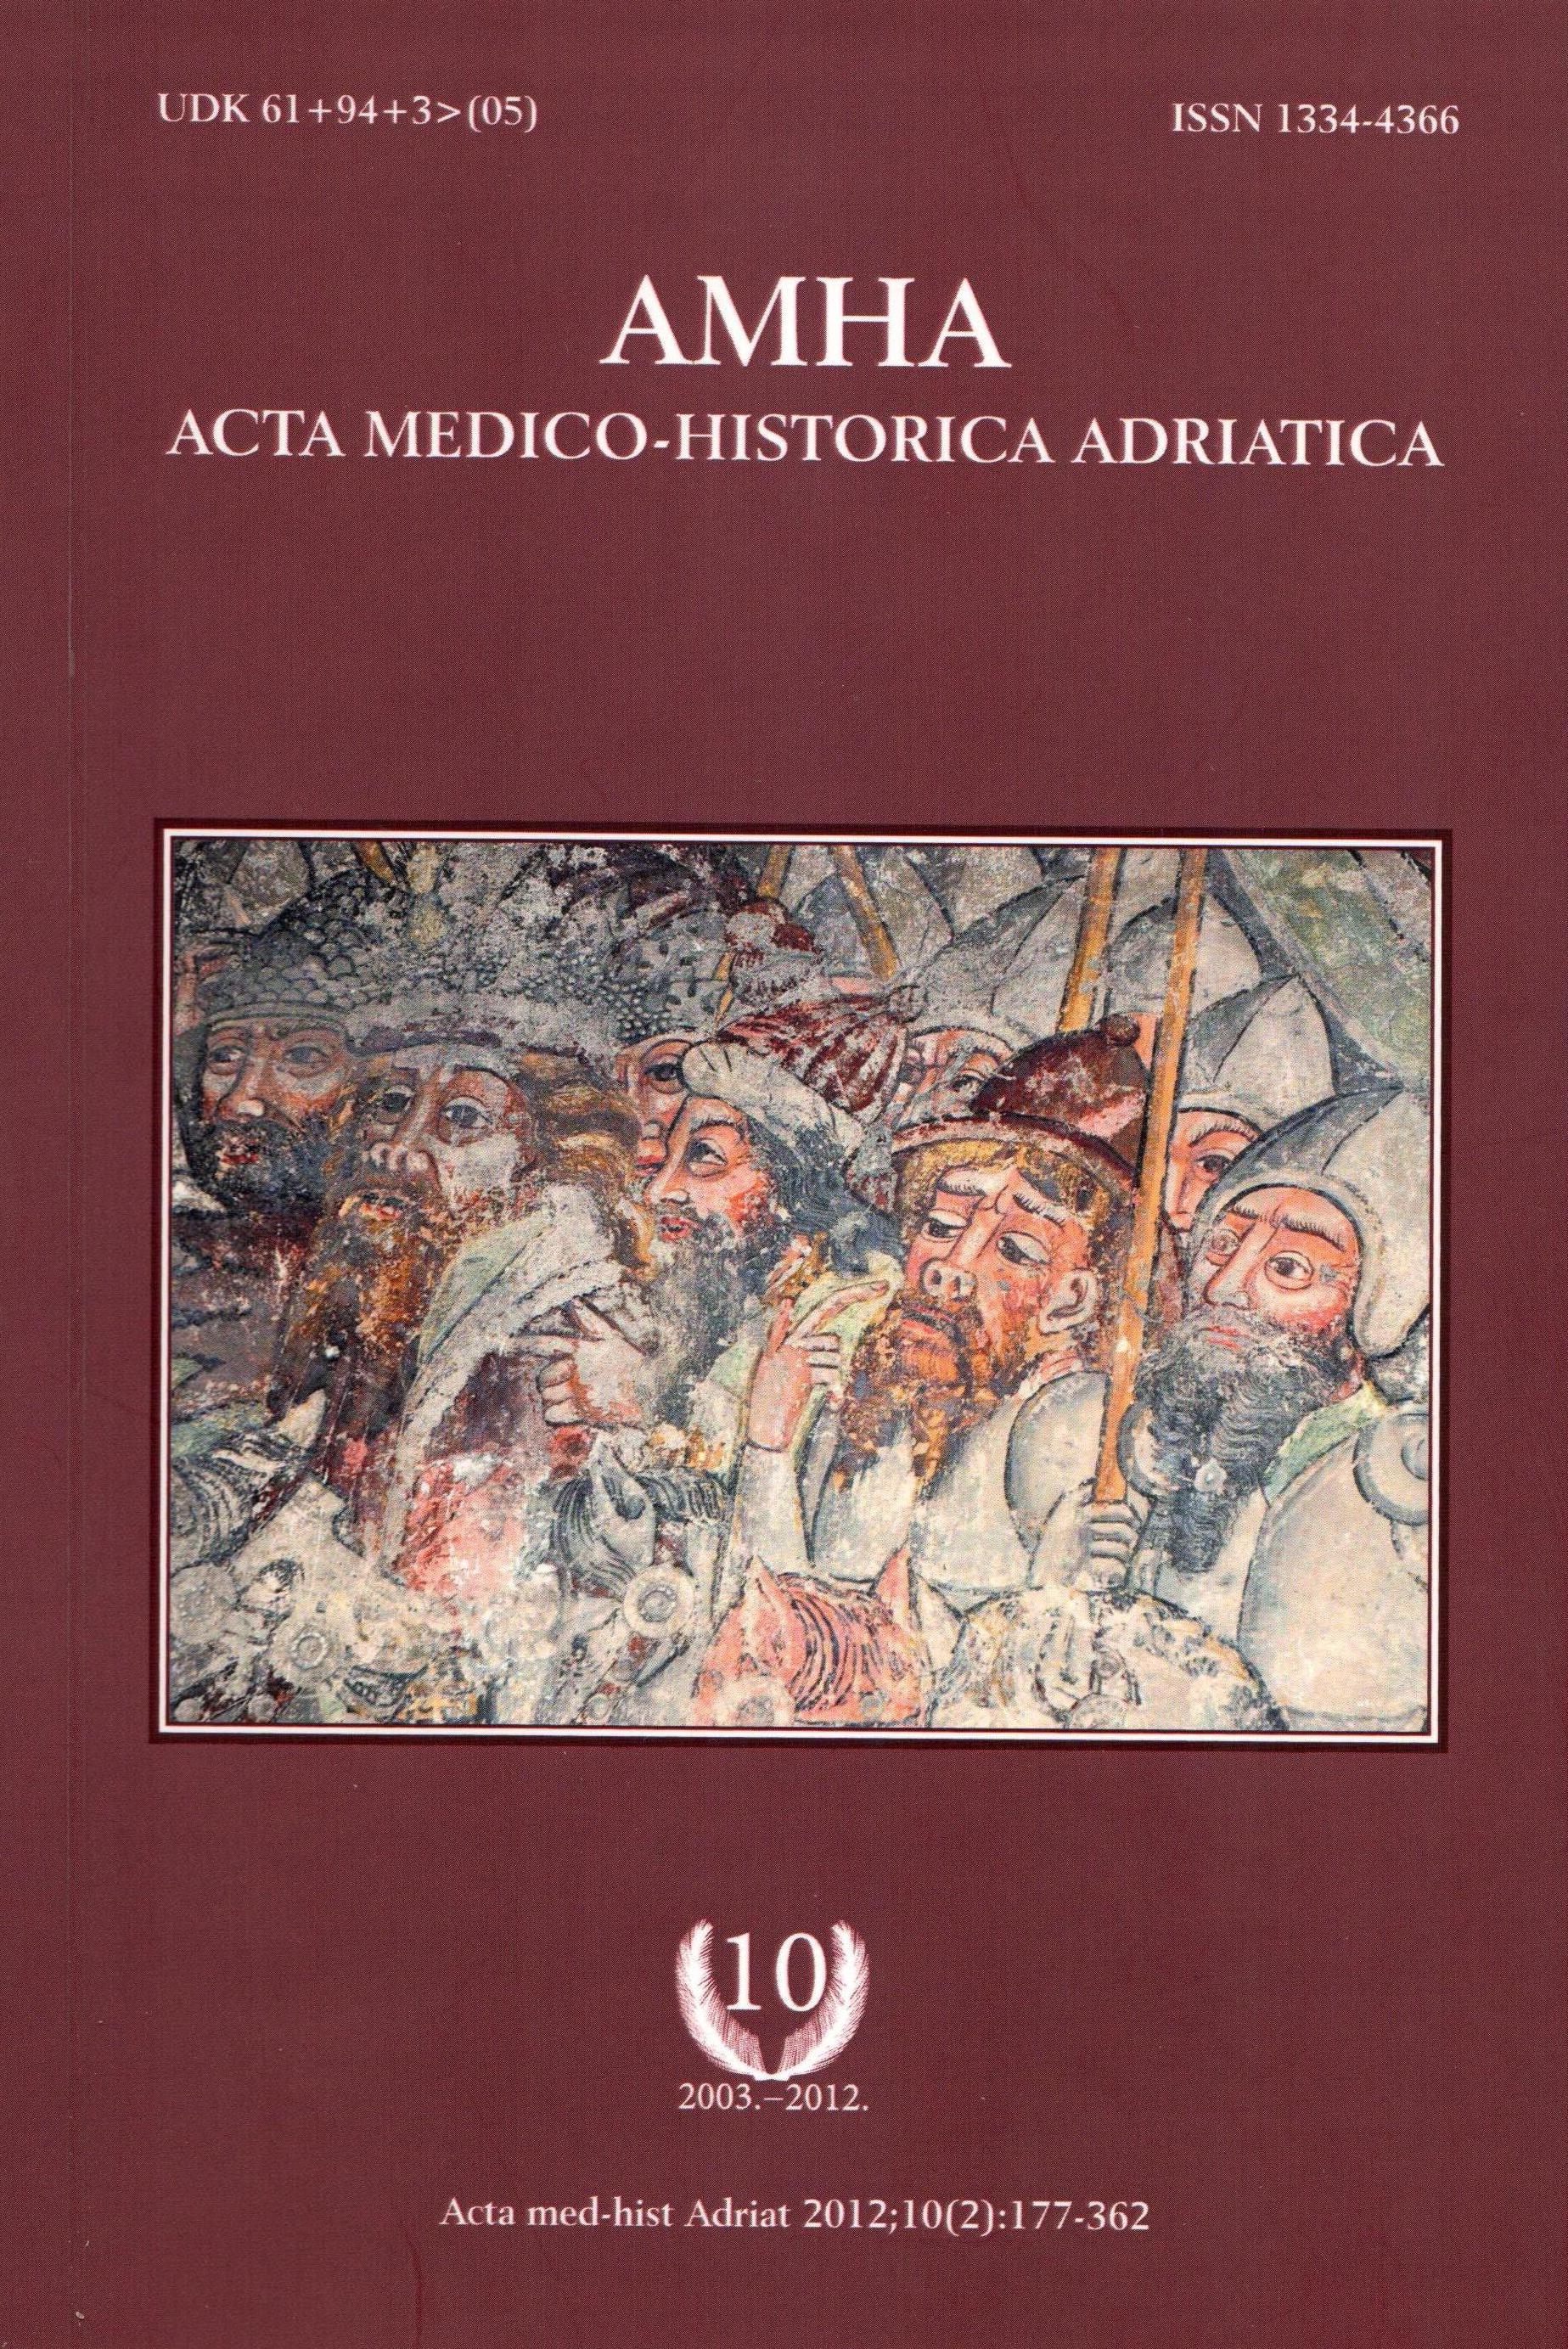 					View Vol. 10 No. 2 (2012): Vol 10 No 2 (2012): AMHA – Acta medico-historica Adriatica
				